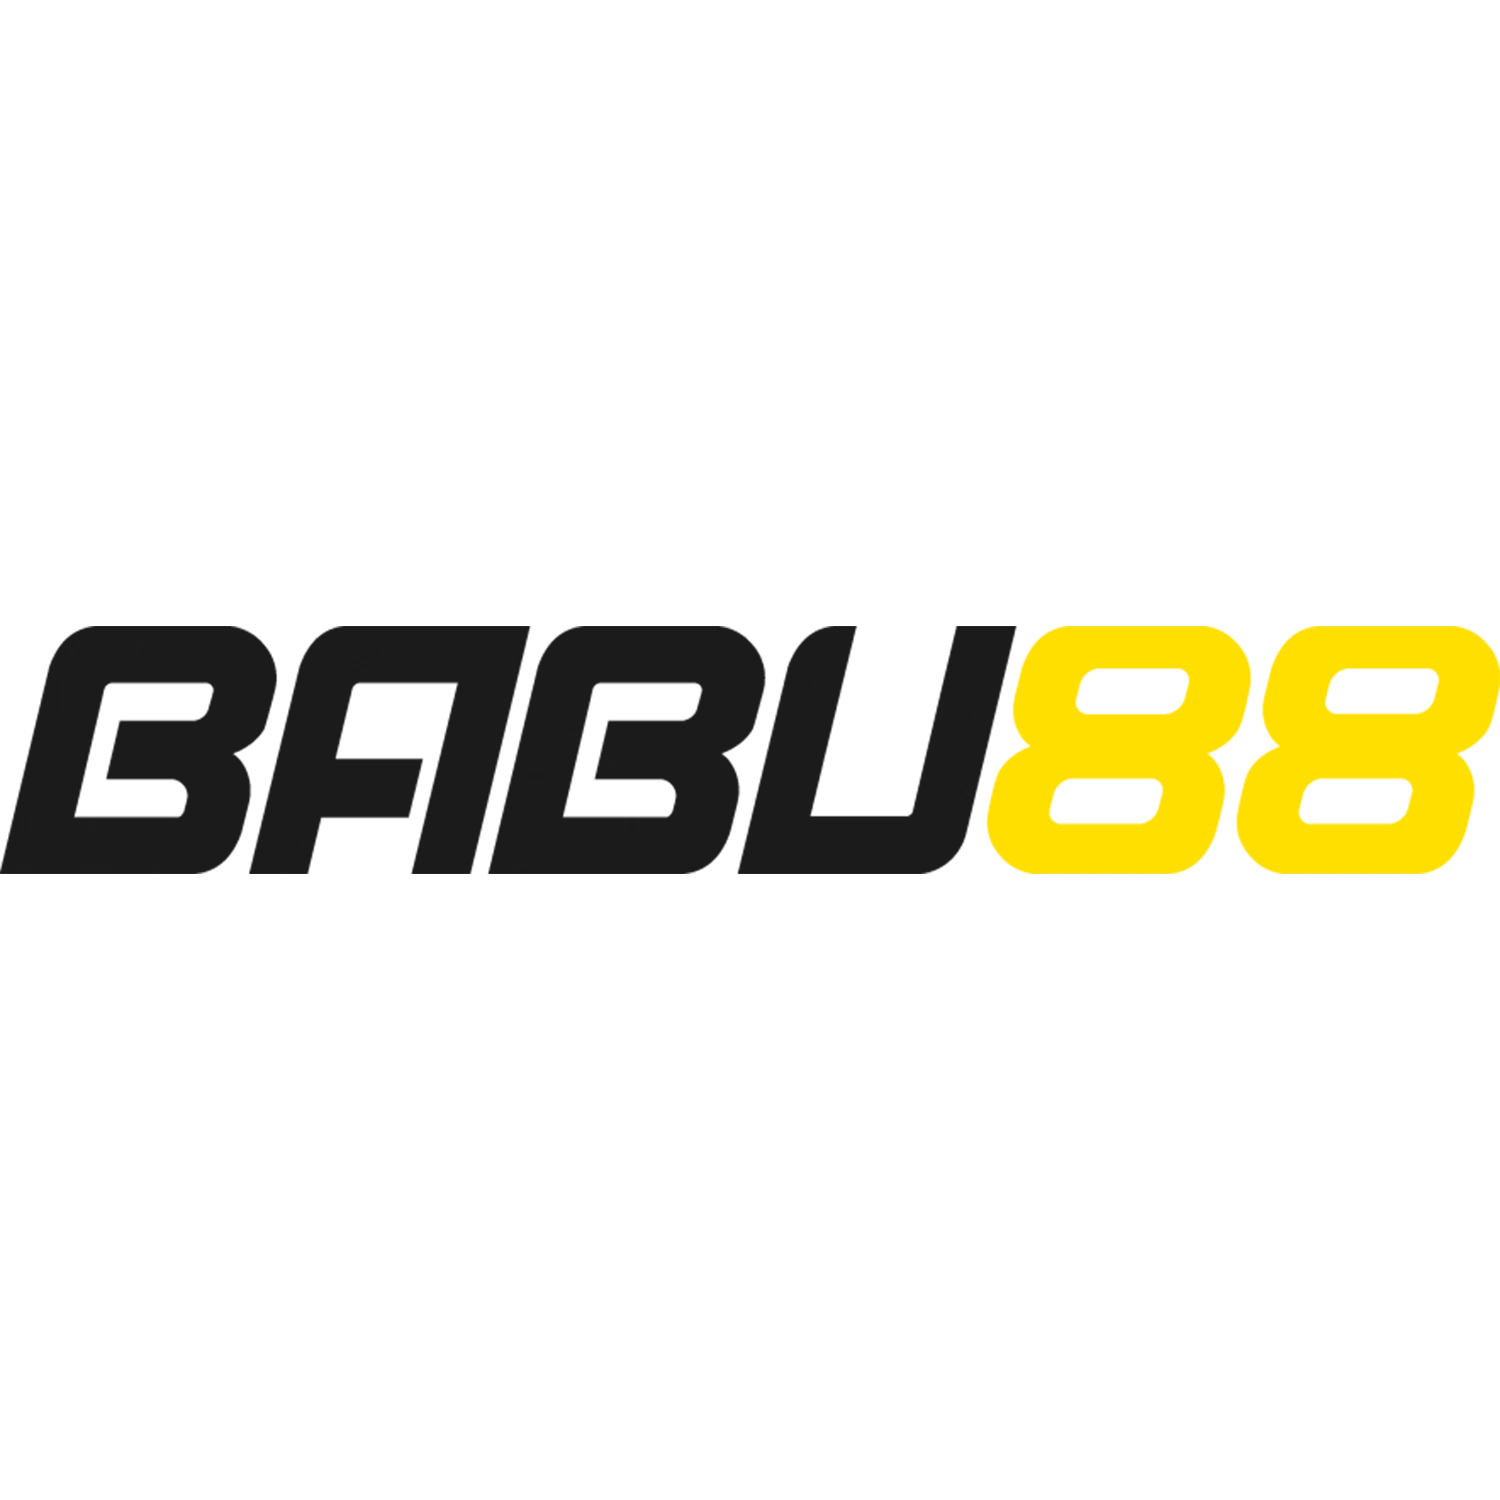 Babu88 online sports betting and casino in Bangladesh.